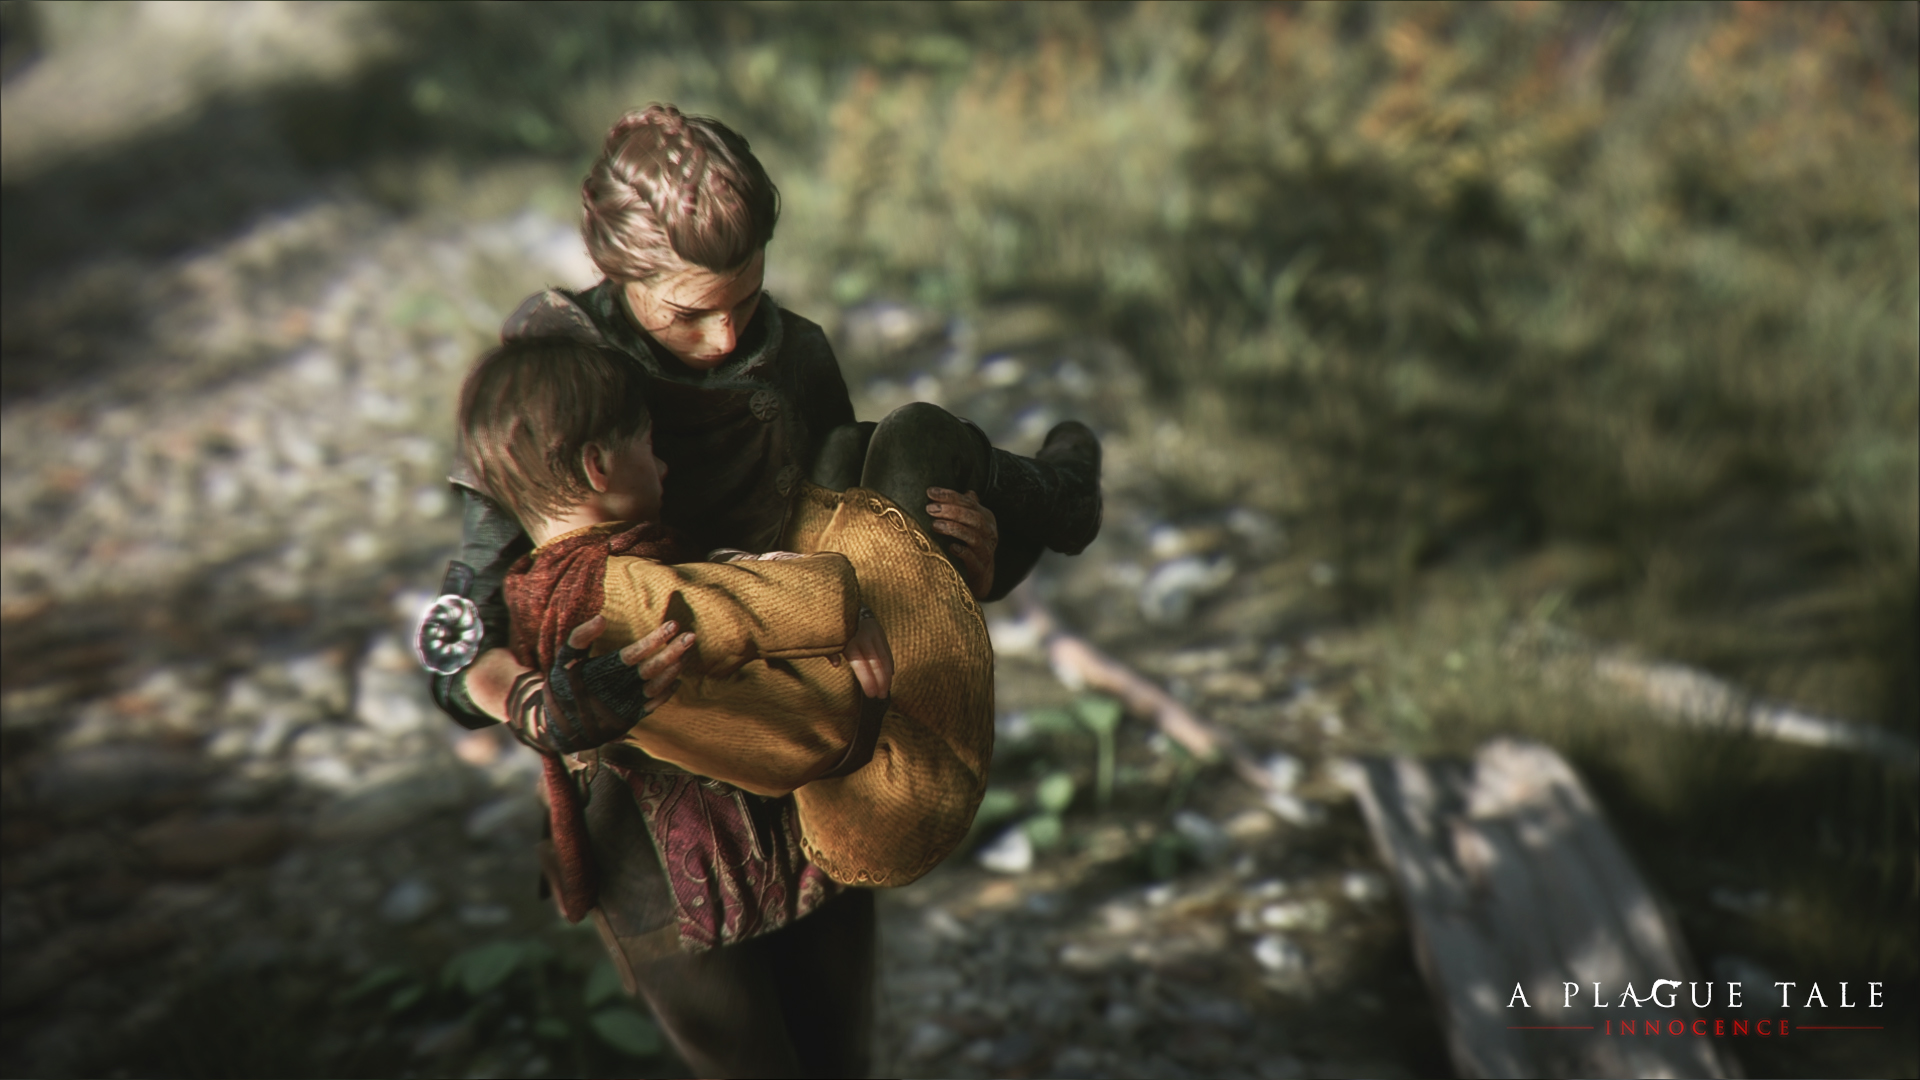 The Last of Us & Studio Ghibli Were A Plague Tale Innocence Inspirations